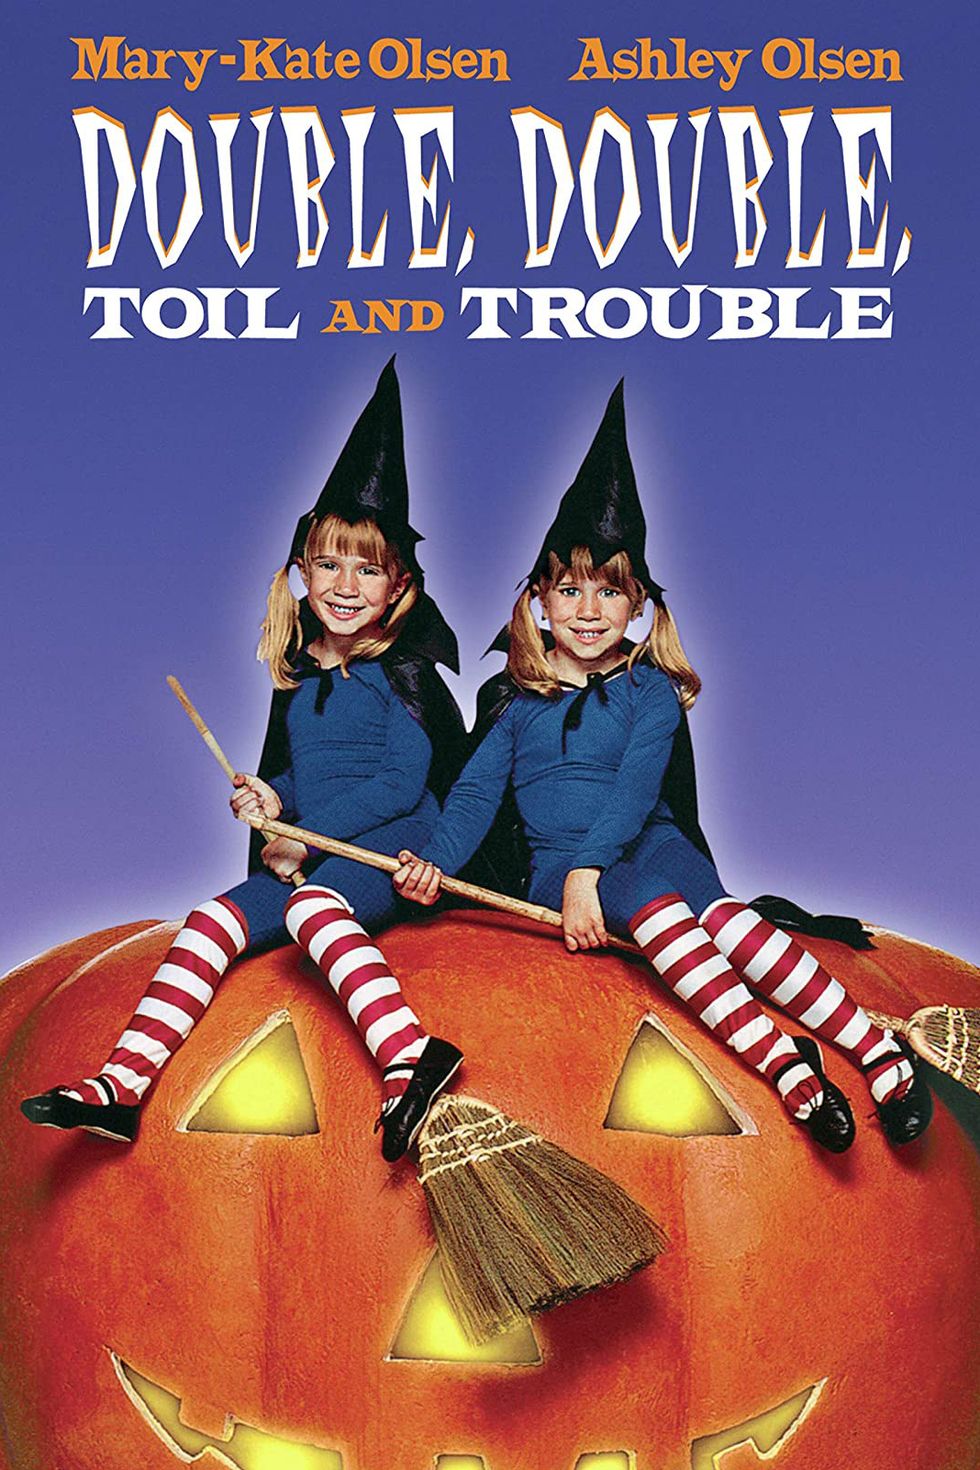 55 Best Kids' Halloween Movies and FamilyFriendly Spooky Films